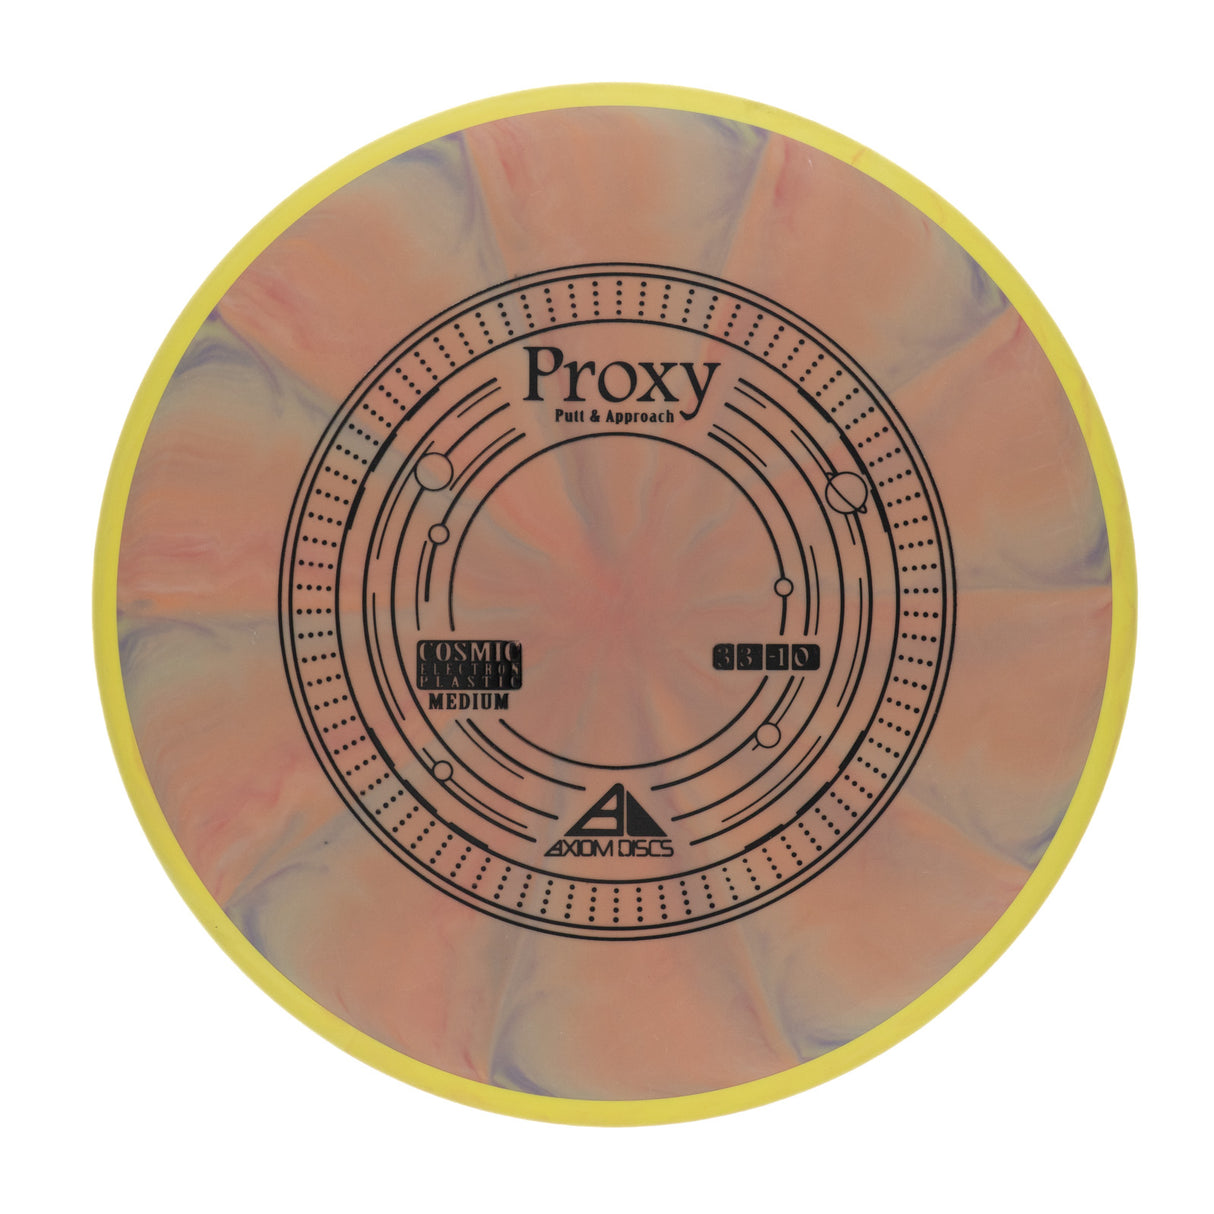 Axiom Proxy - Cosmic Electron Medium 174g | Style 0001